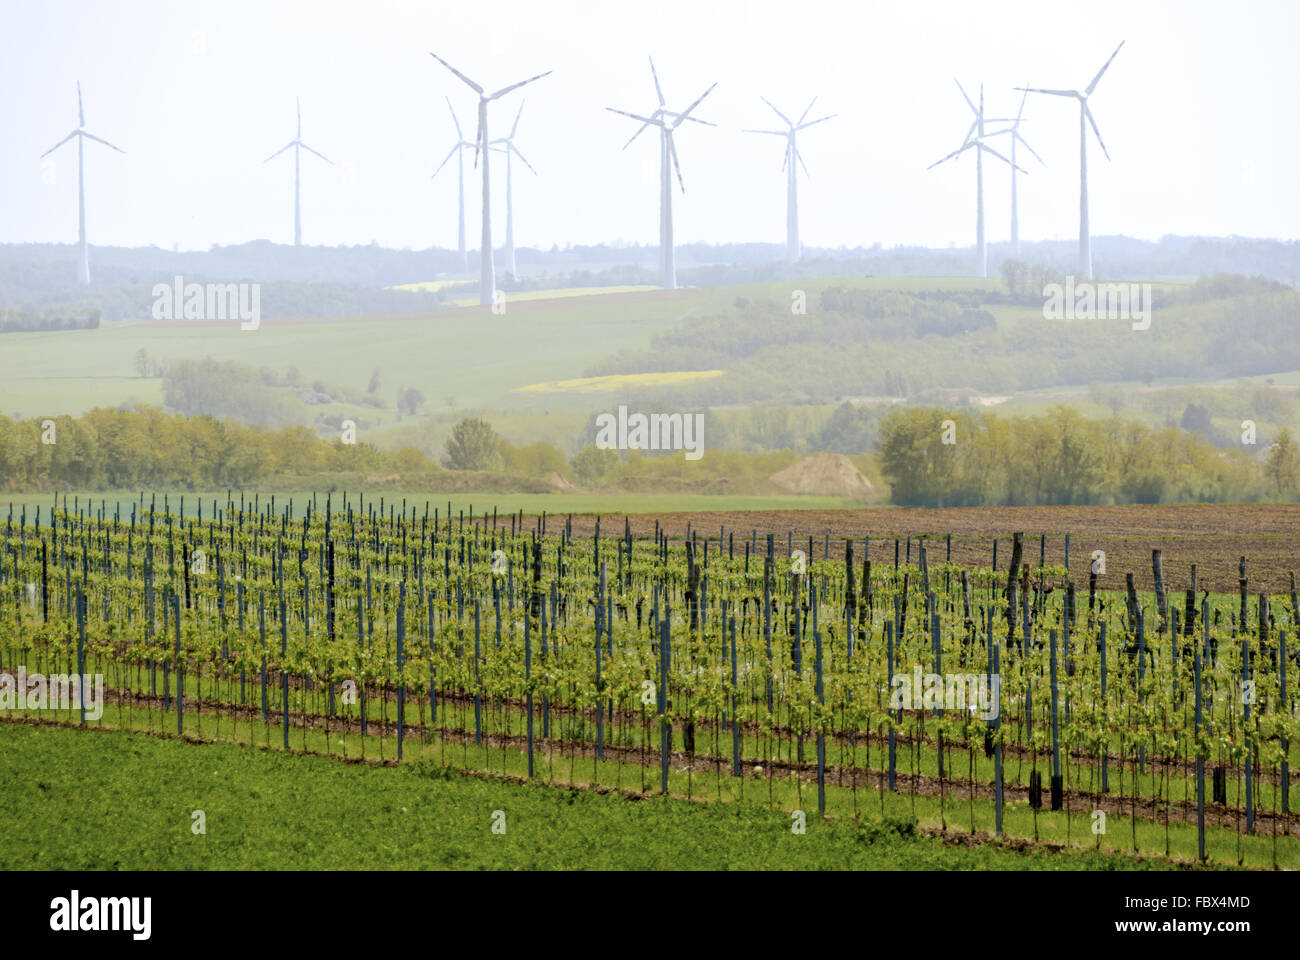 summery Vineyard with wind turbines Stock Photo